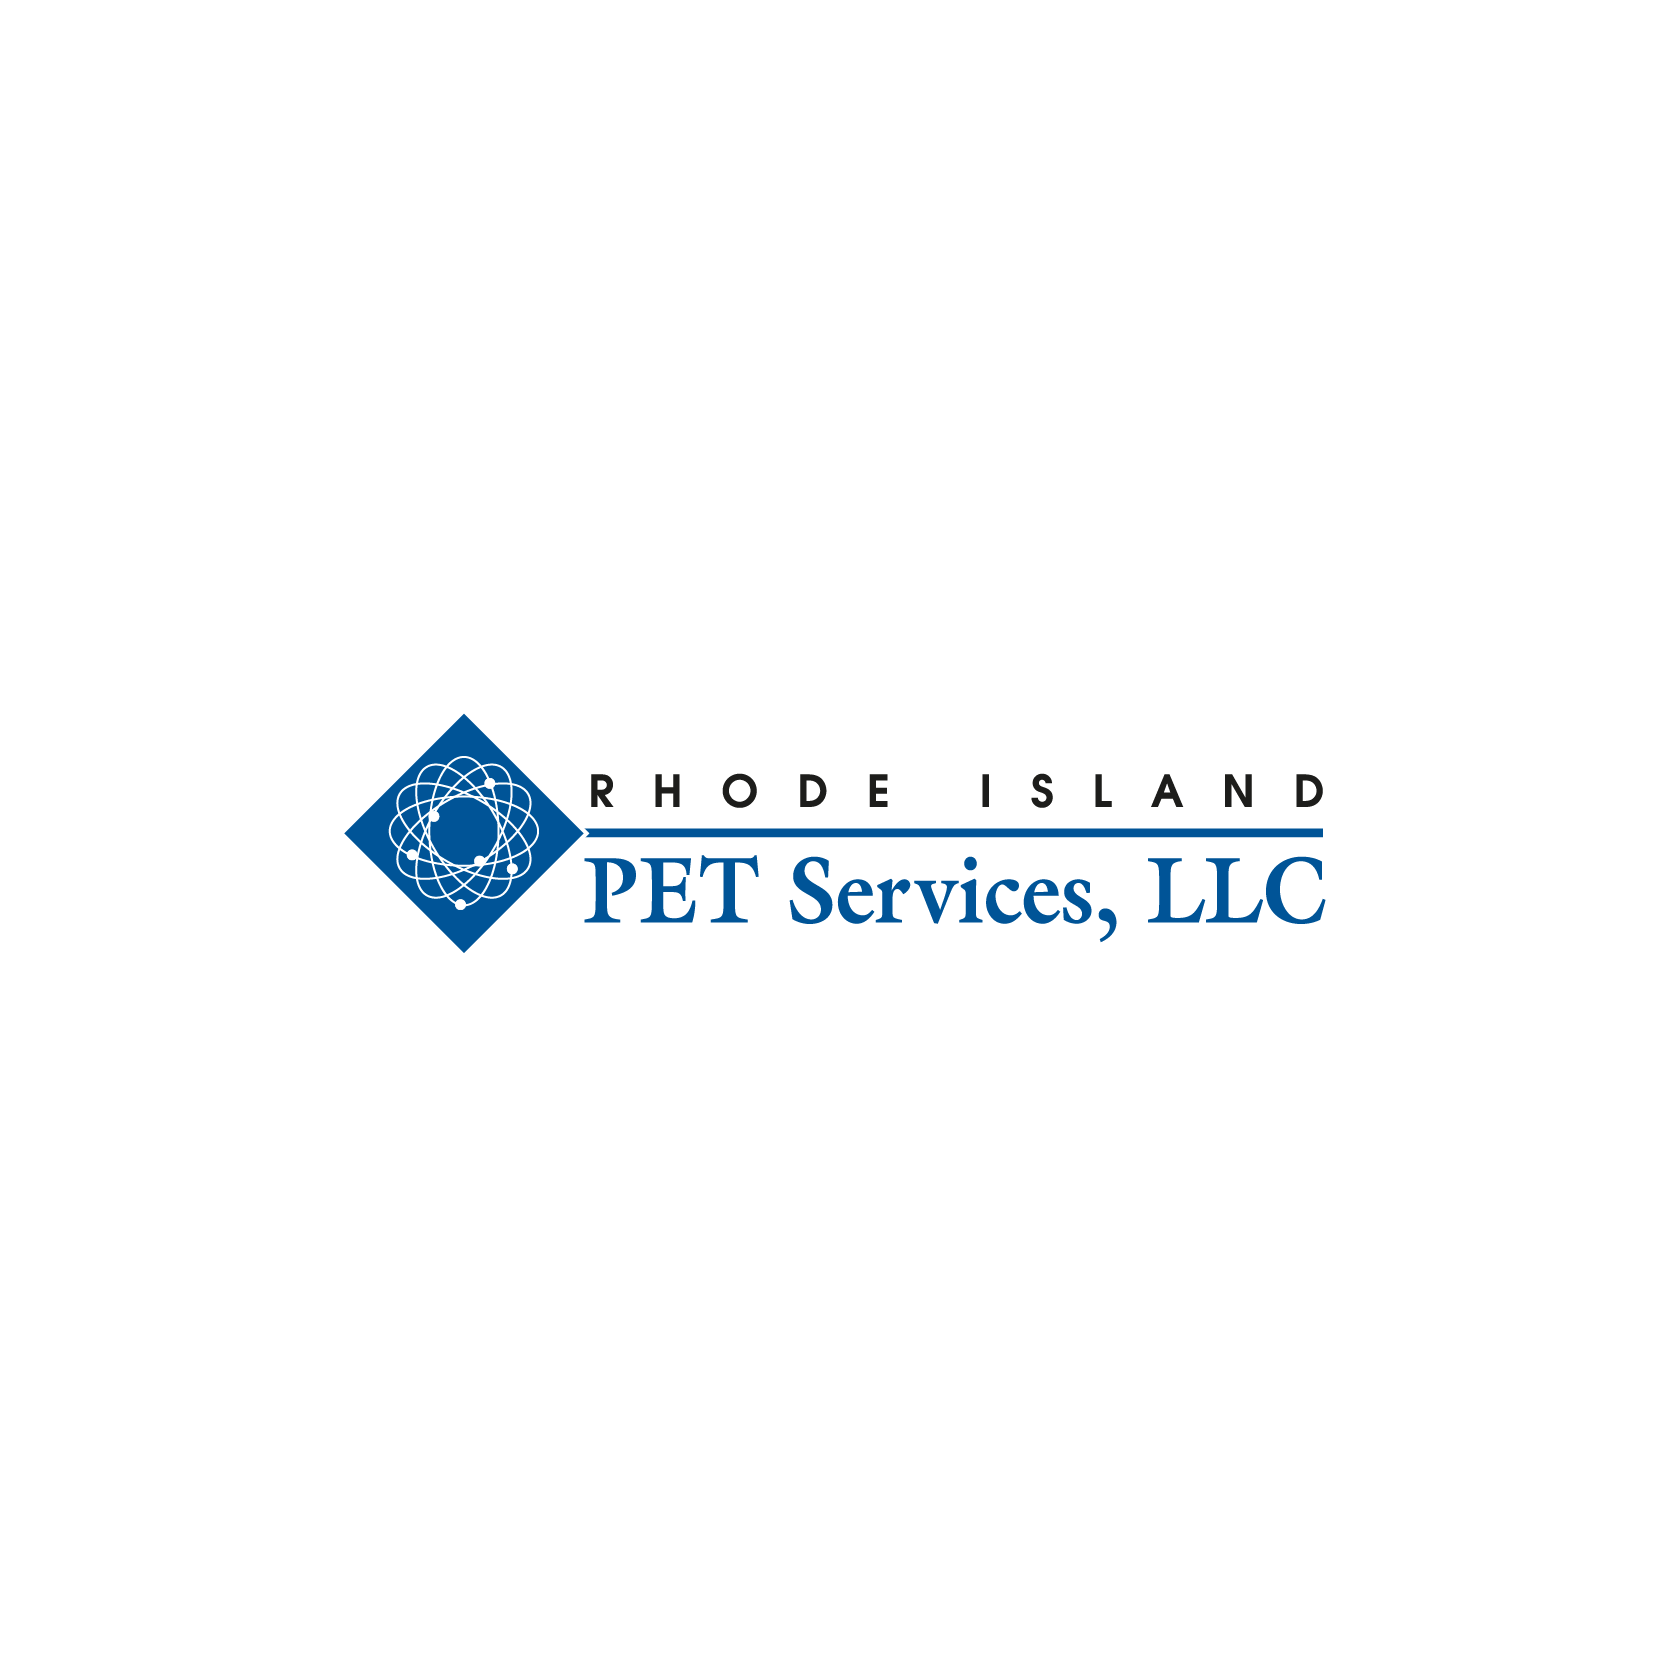 Rhode Island PET Services